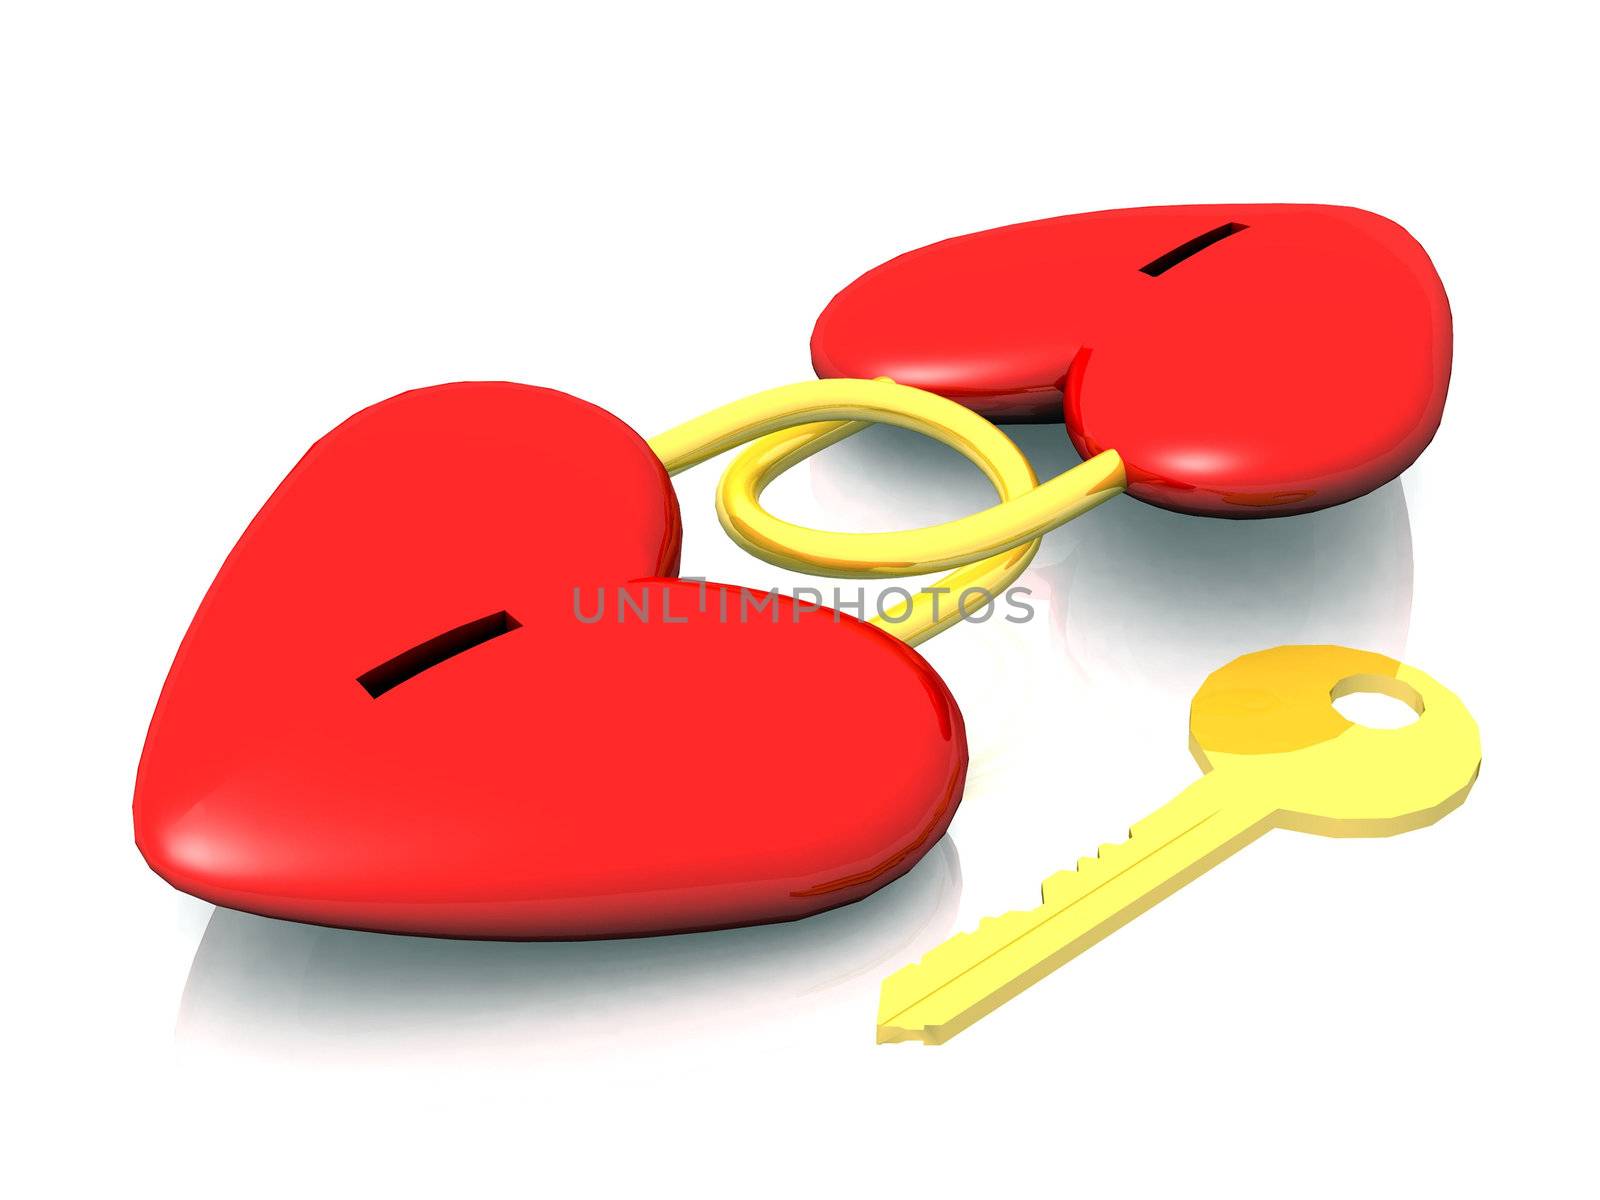 the key of the heart by njaj